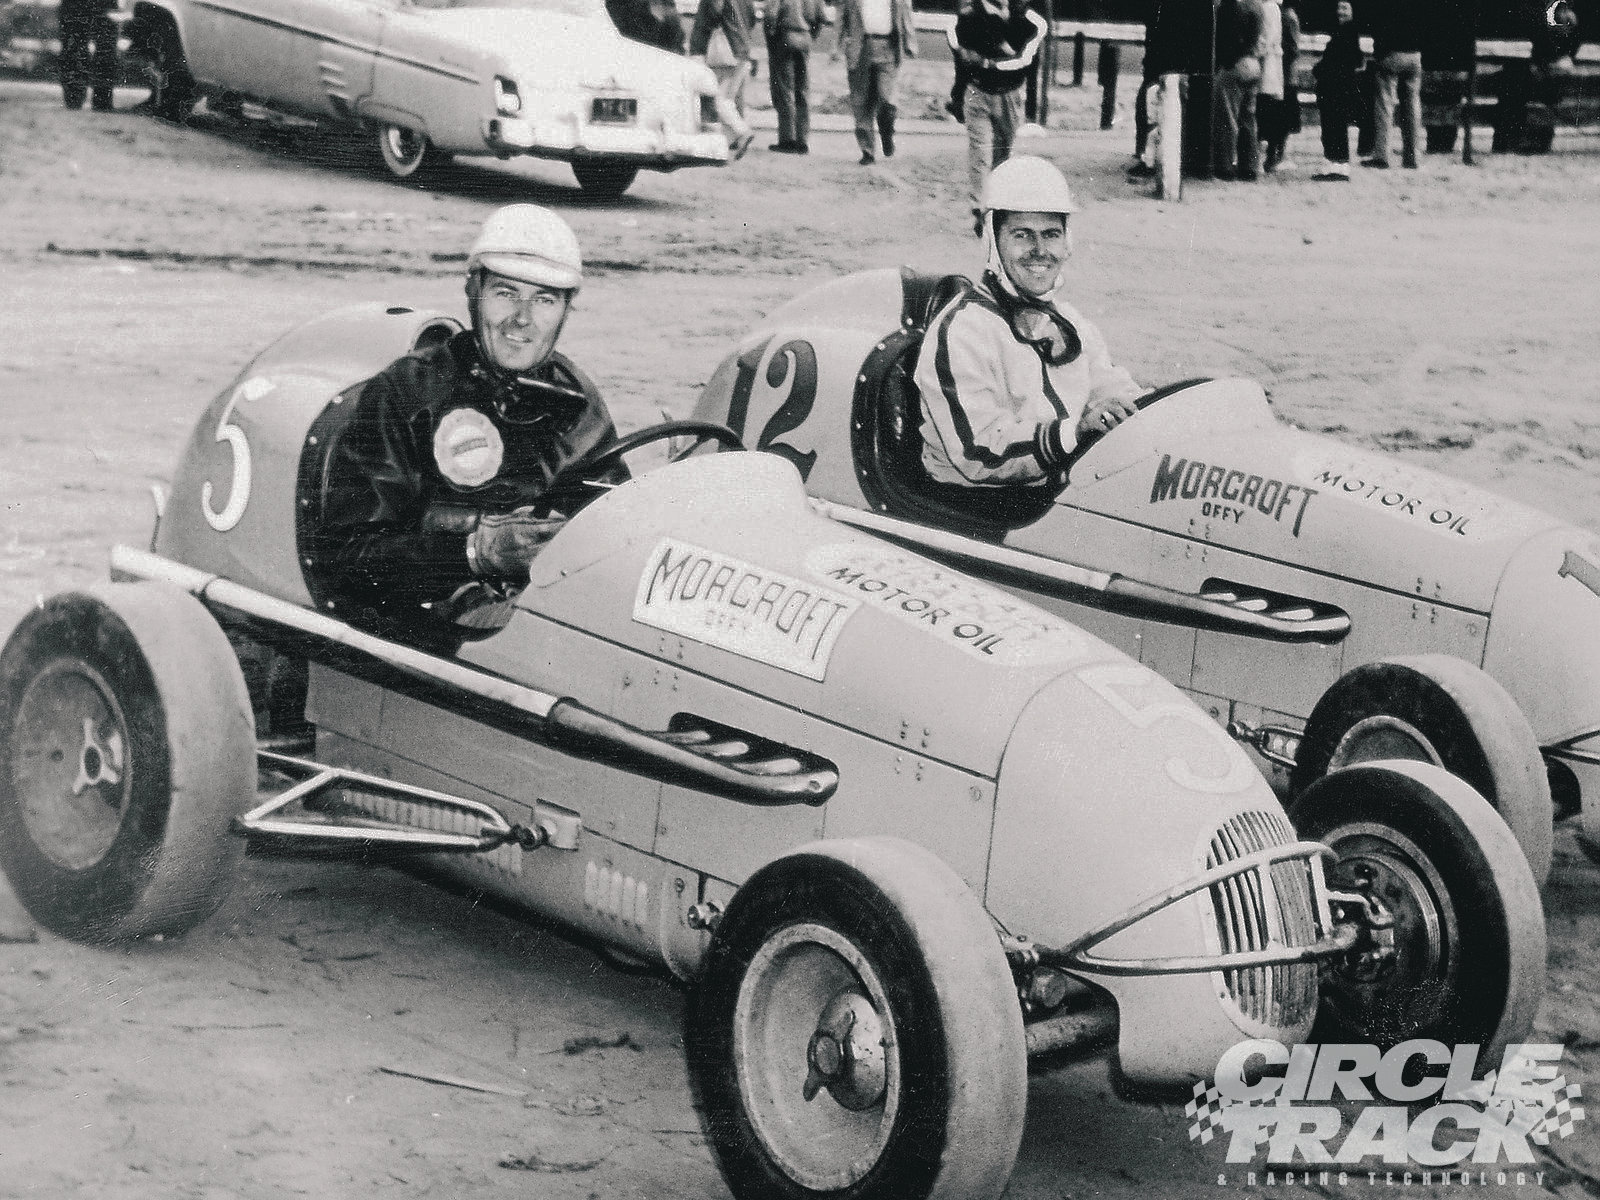 Old midget auto racers